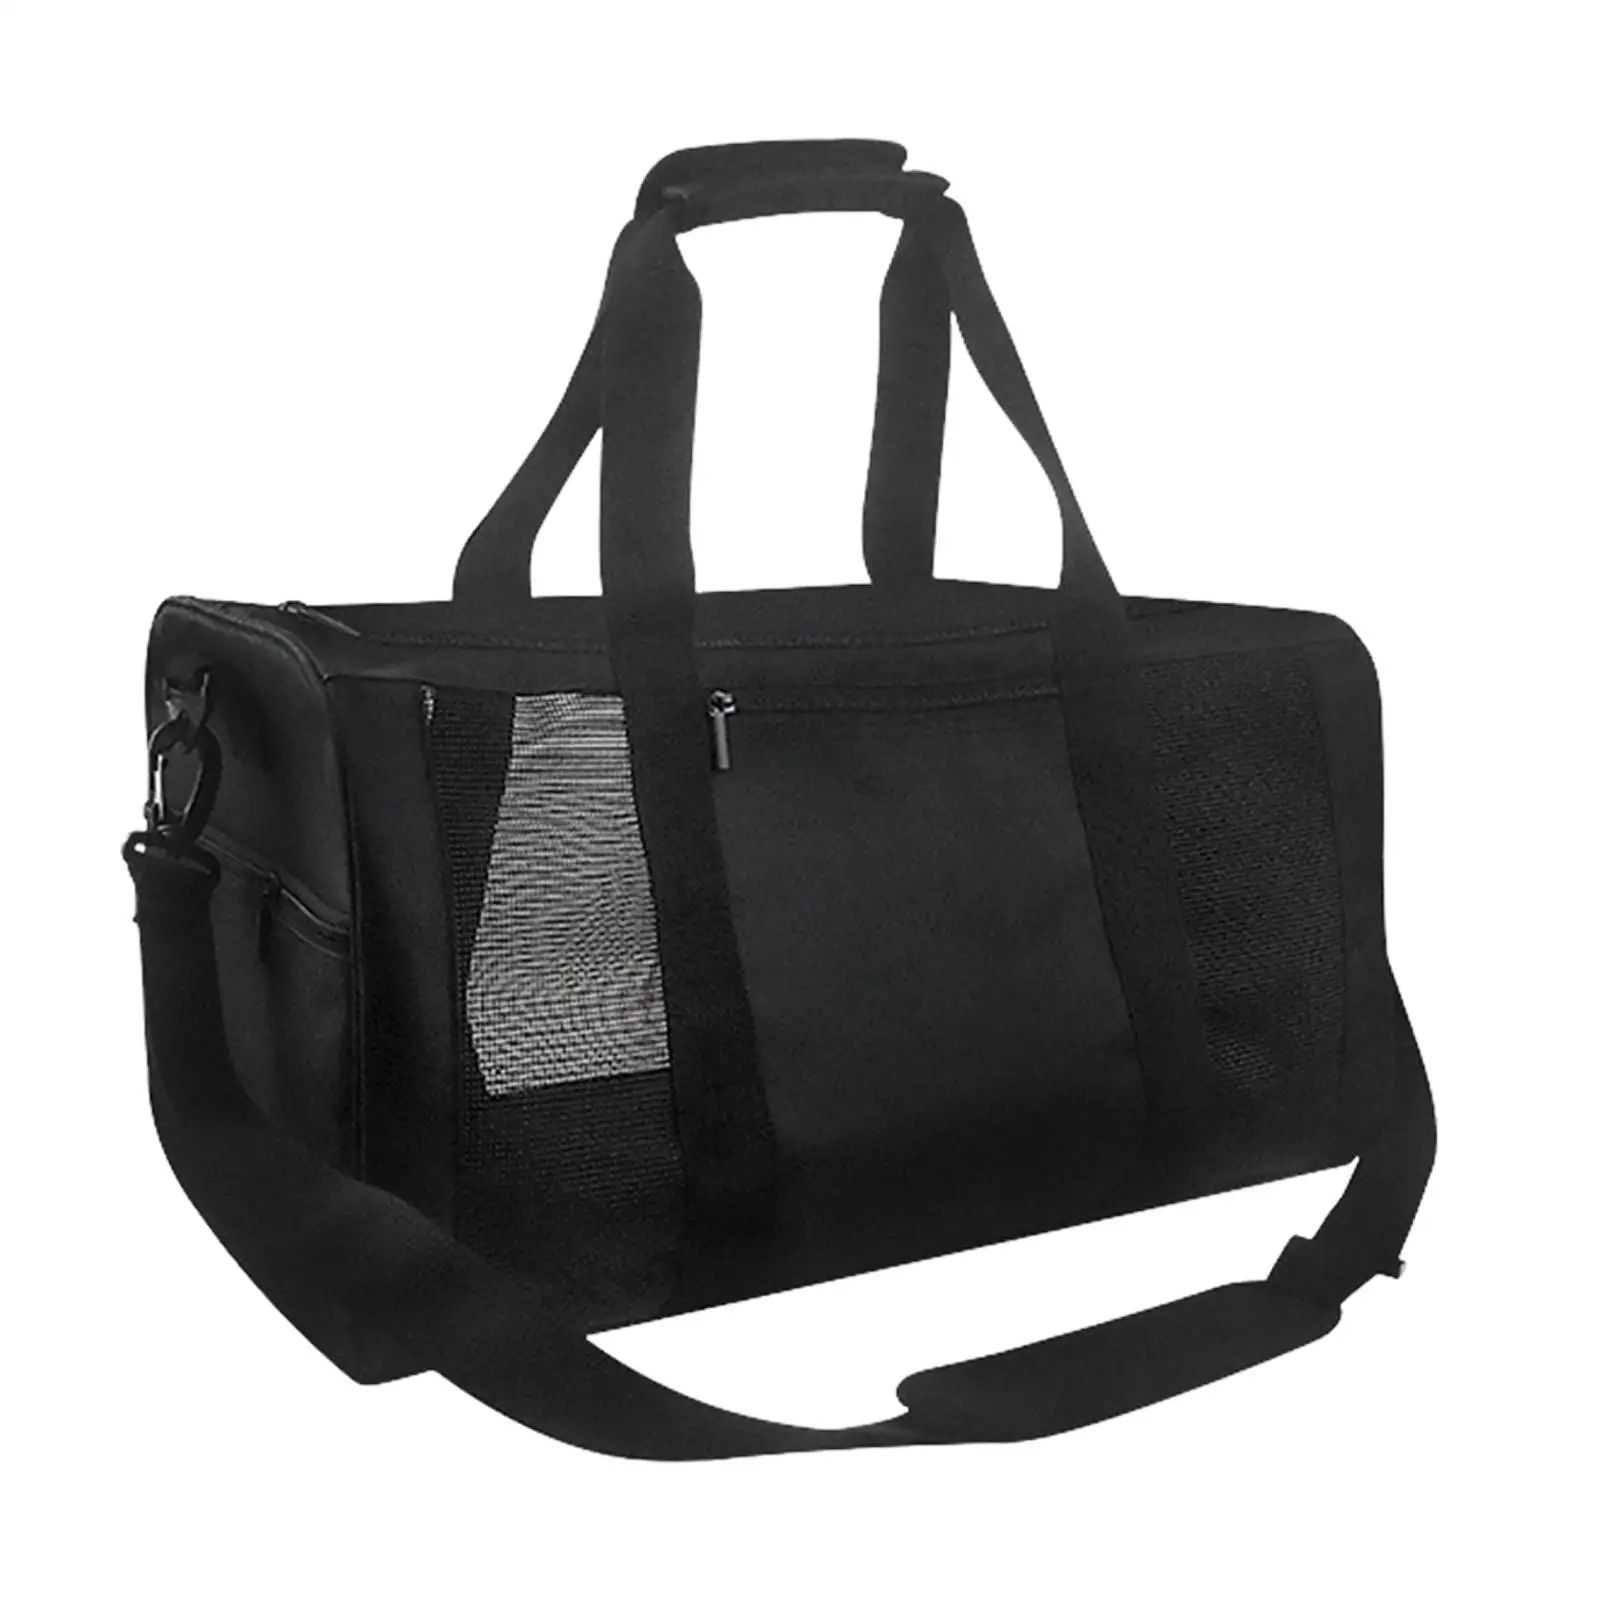 Gym Mesh Bag Gym Easy Dry Adjustable Strap Gym Accessories Cross Shoulder Carry on Bag Sports Lightweight Sports Gym Bag